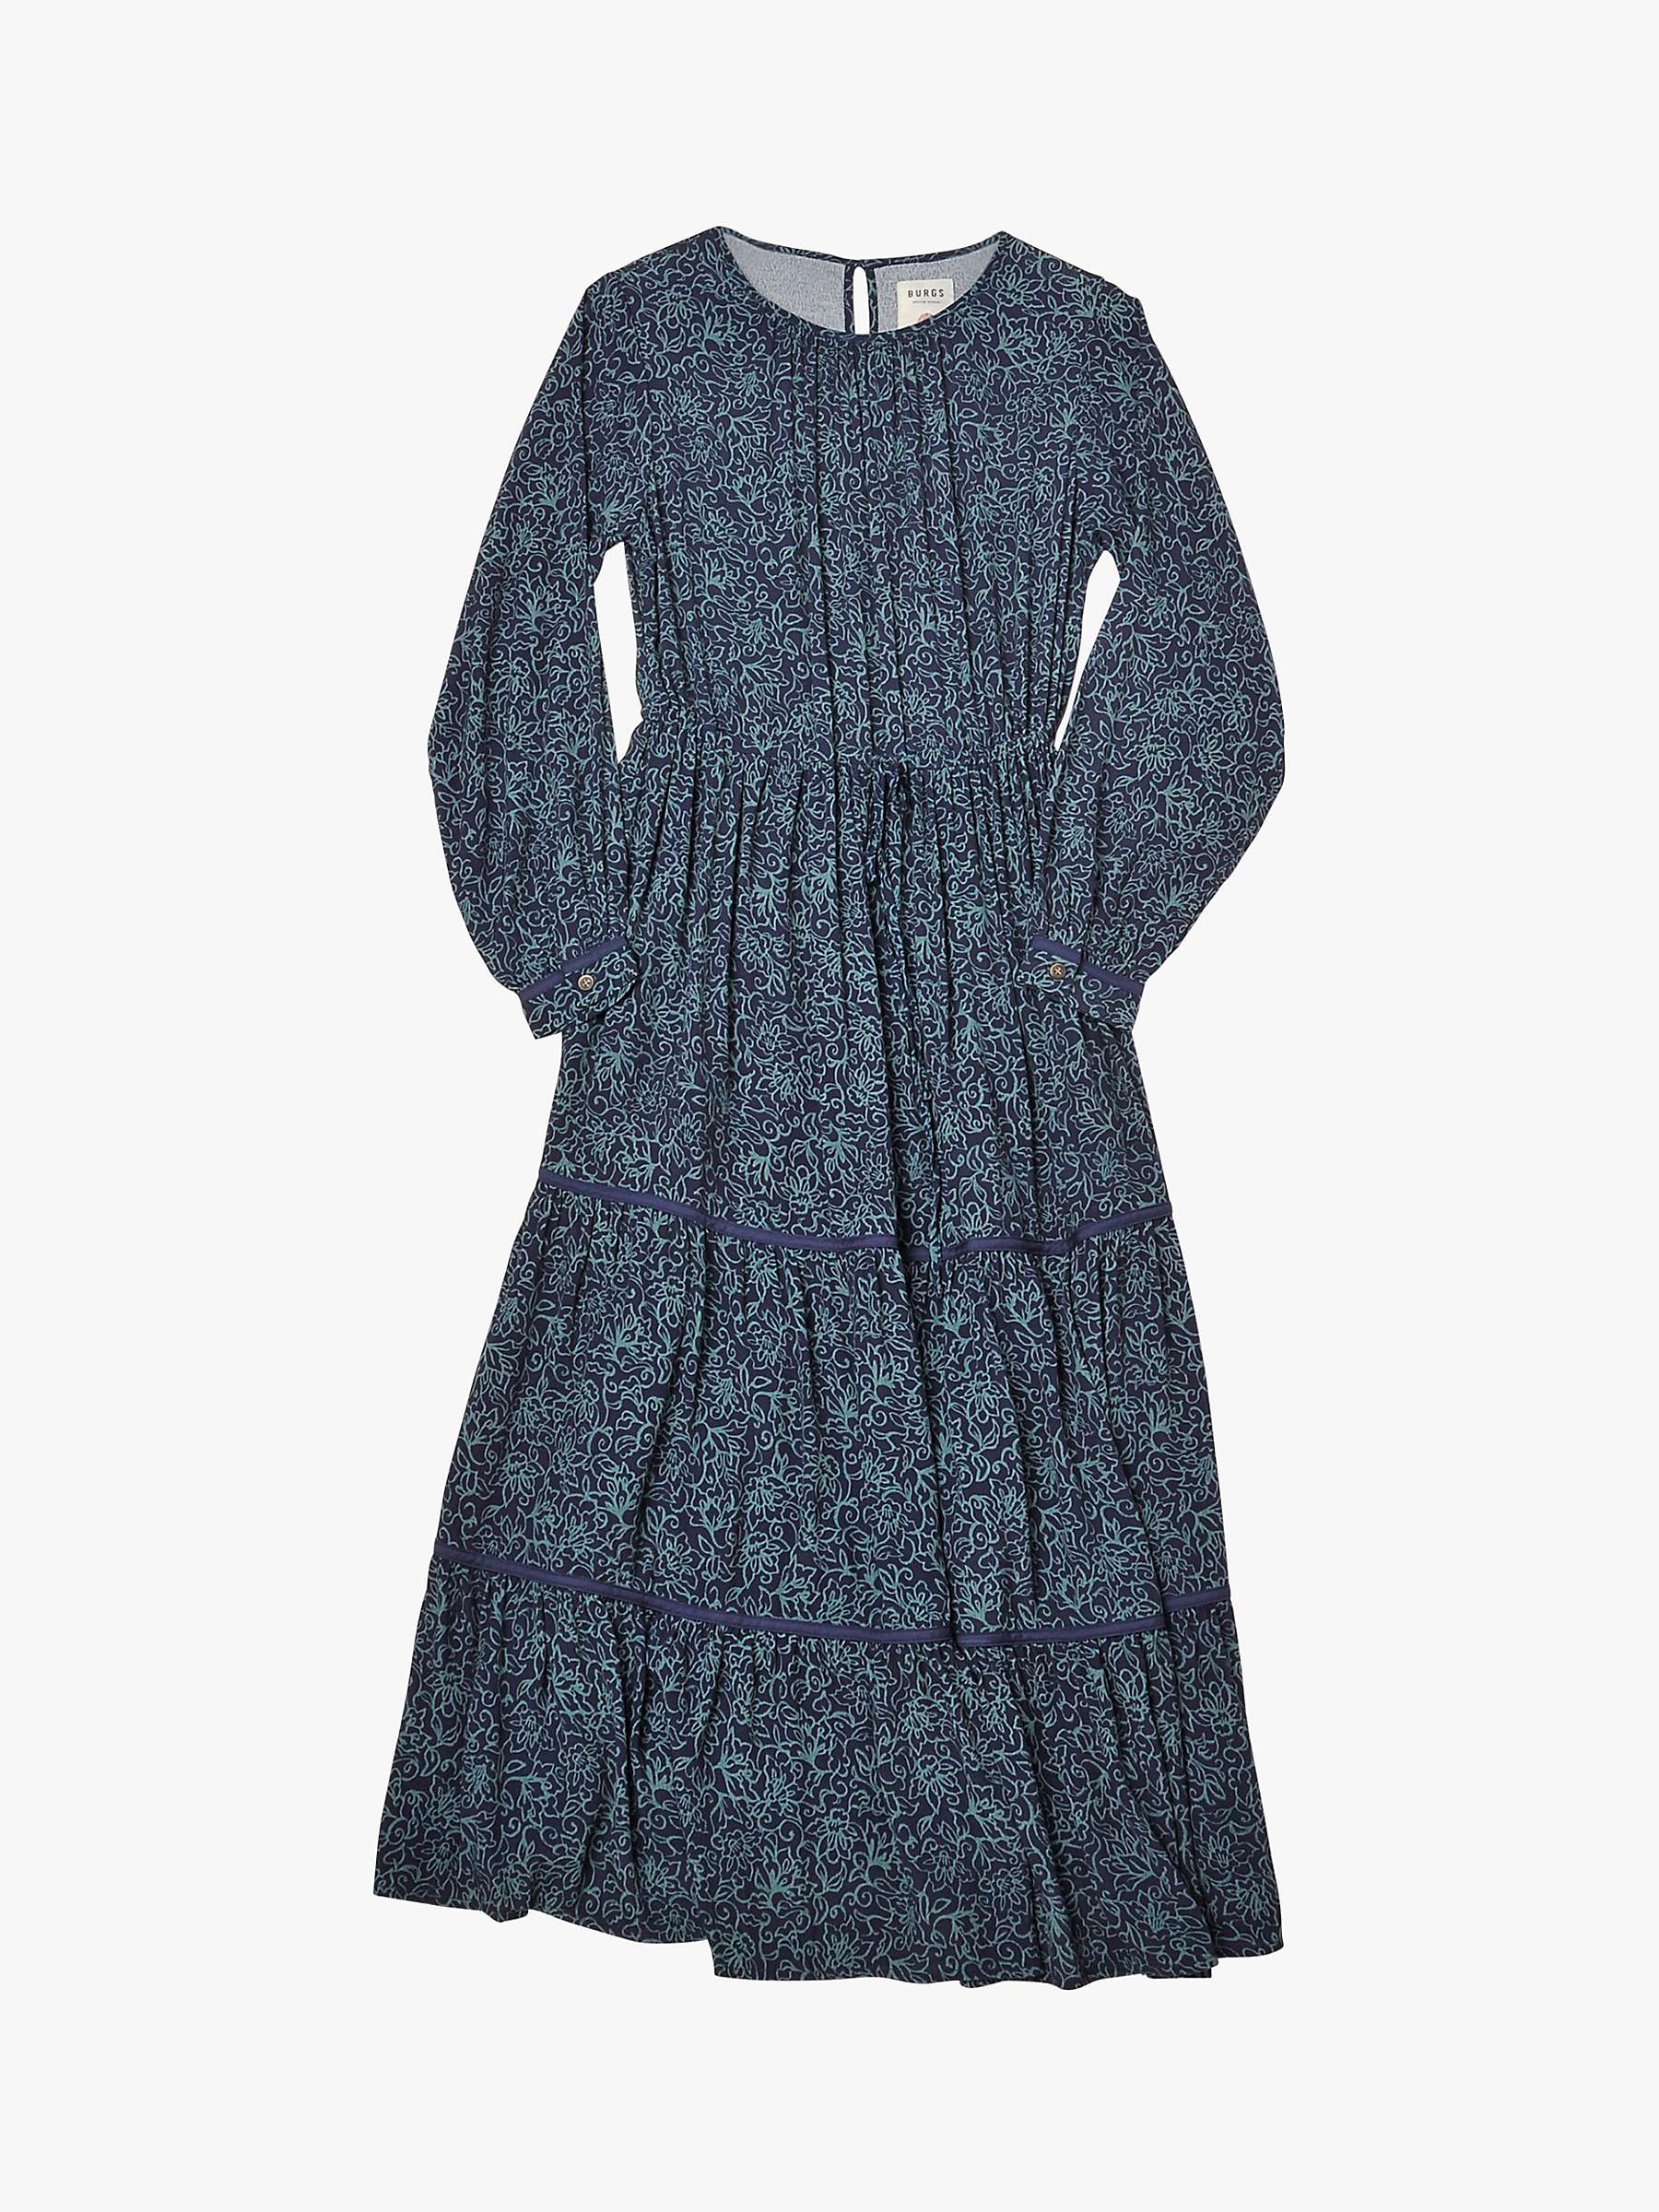 Burgs Folly Printed Tiered Midi Dress, Midnight Navy at John Lewis ...